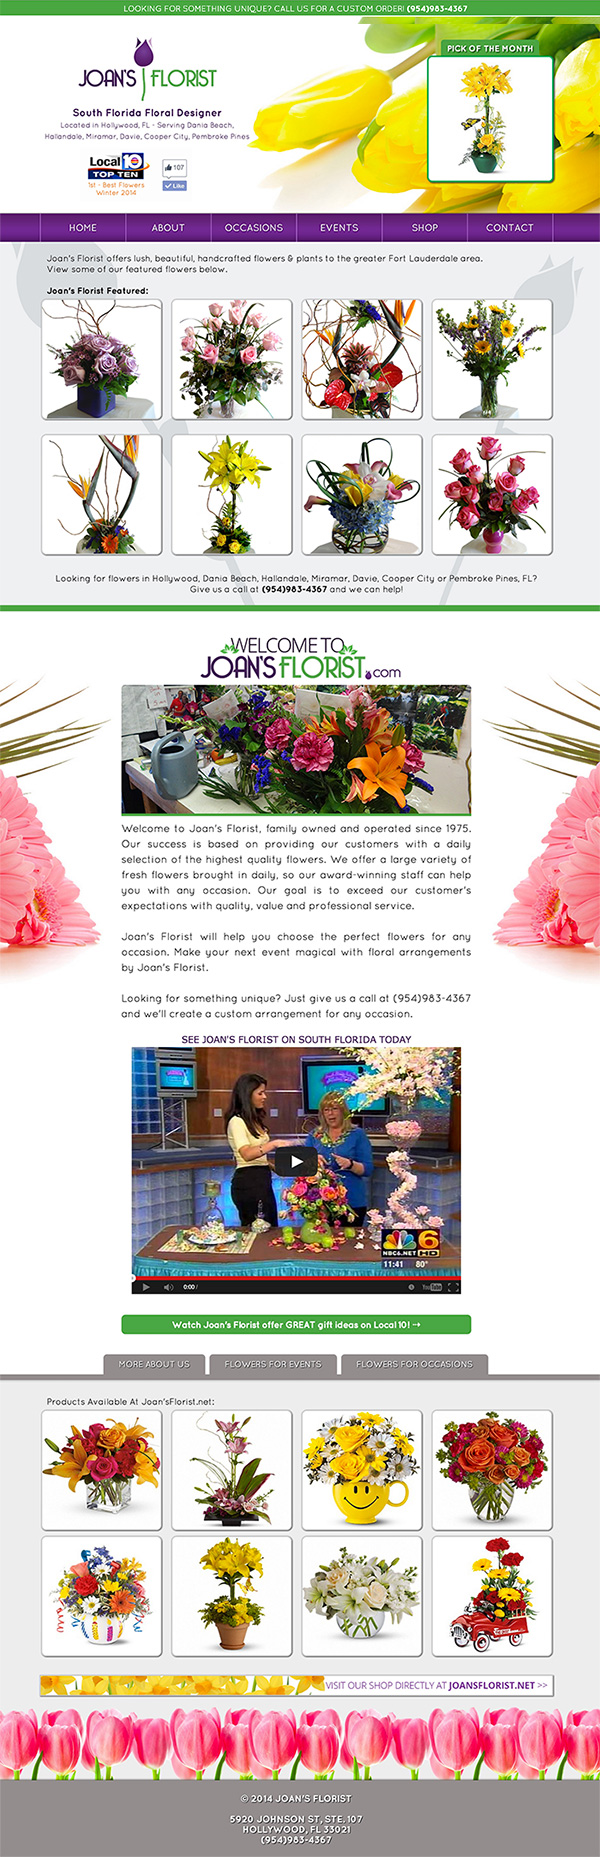 joans-florist-website-design